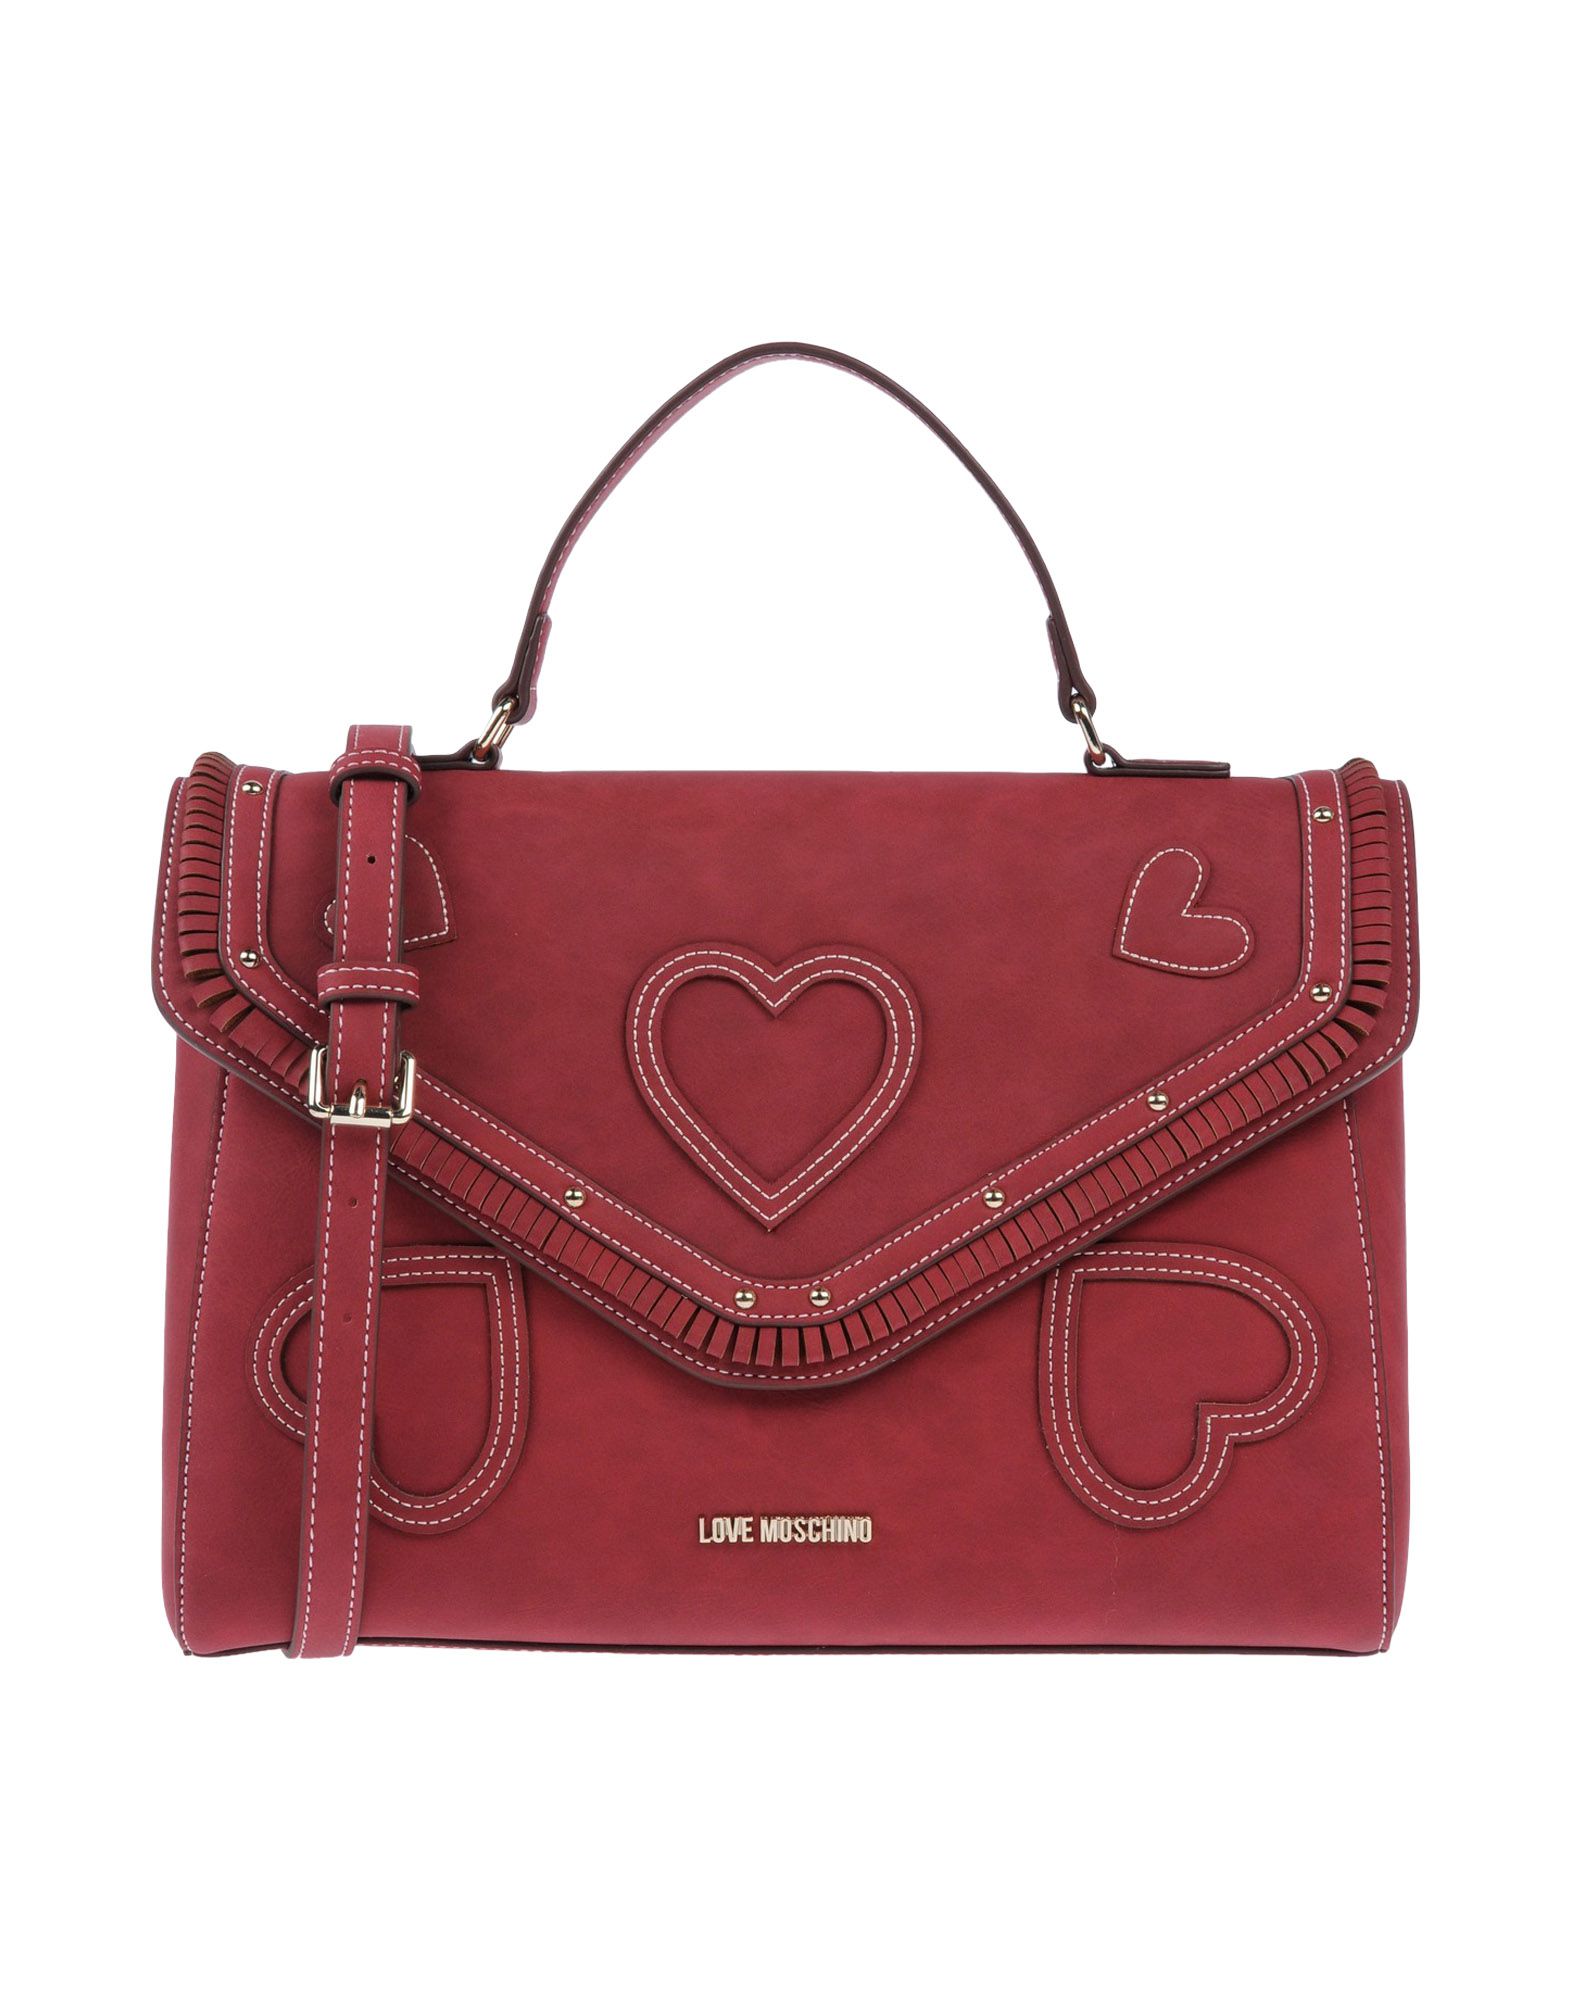 LOVE MOSCHINO Handbag,45400901LG 1